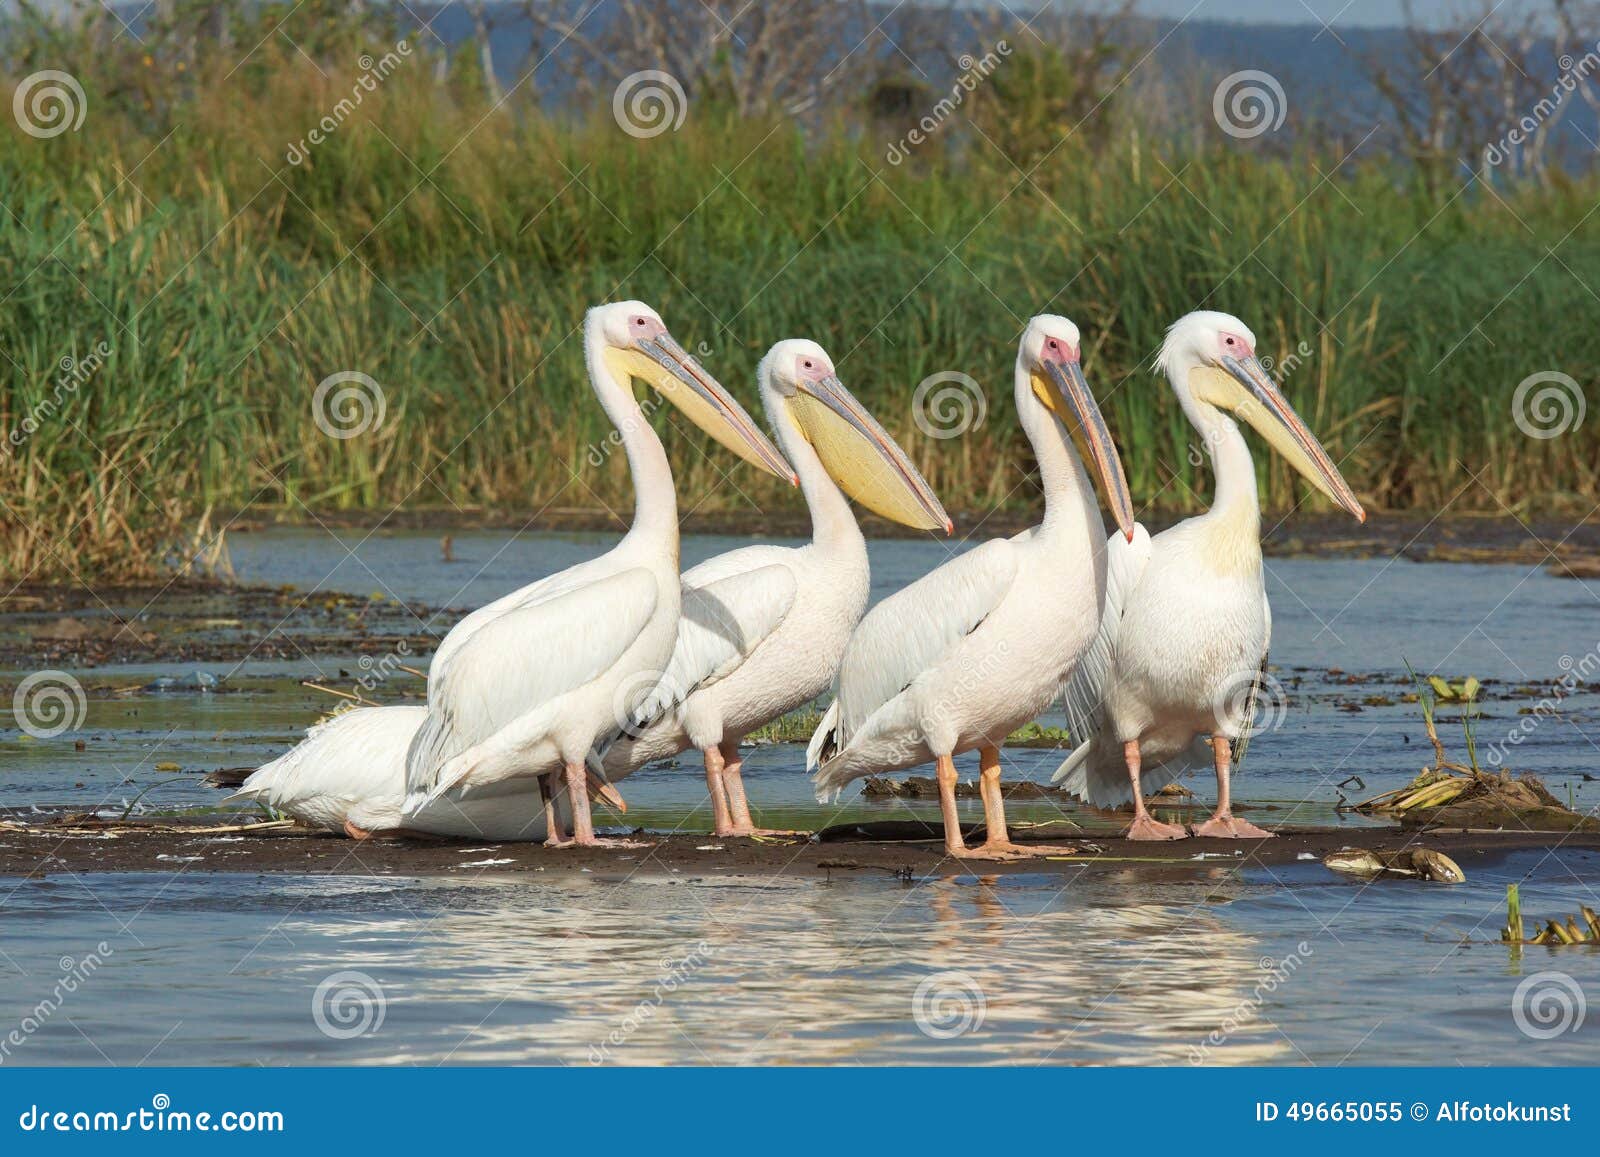 pelican, lake chamo, ethiopia, africa